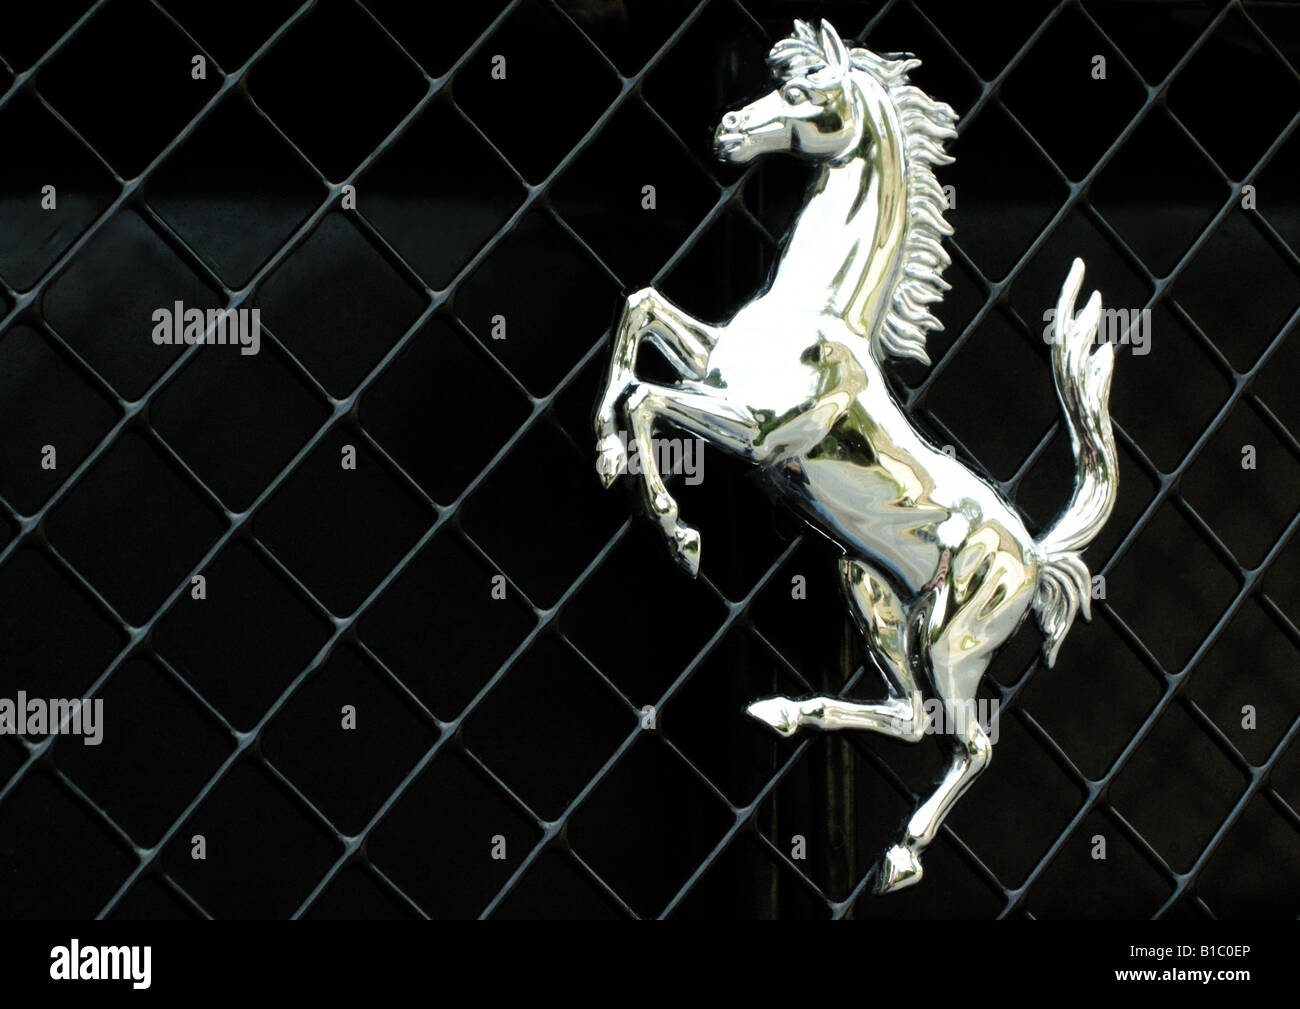 Prancing horse emblem on Ferrari F-430 - F1. Stock Photo